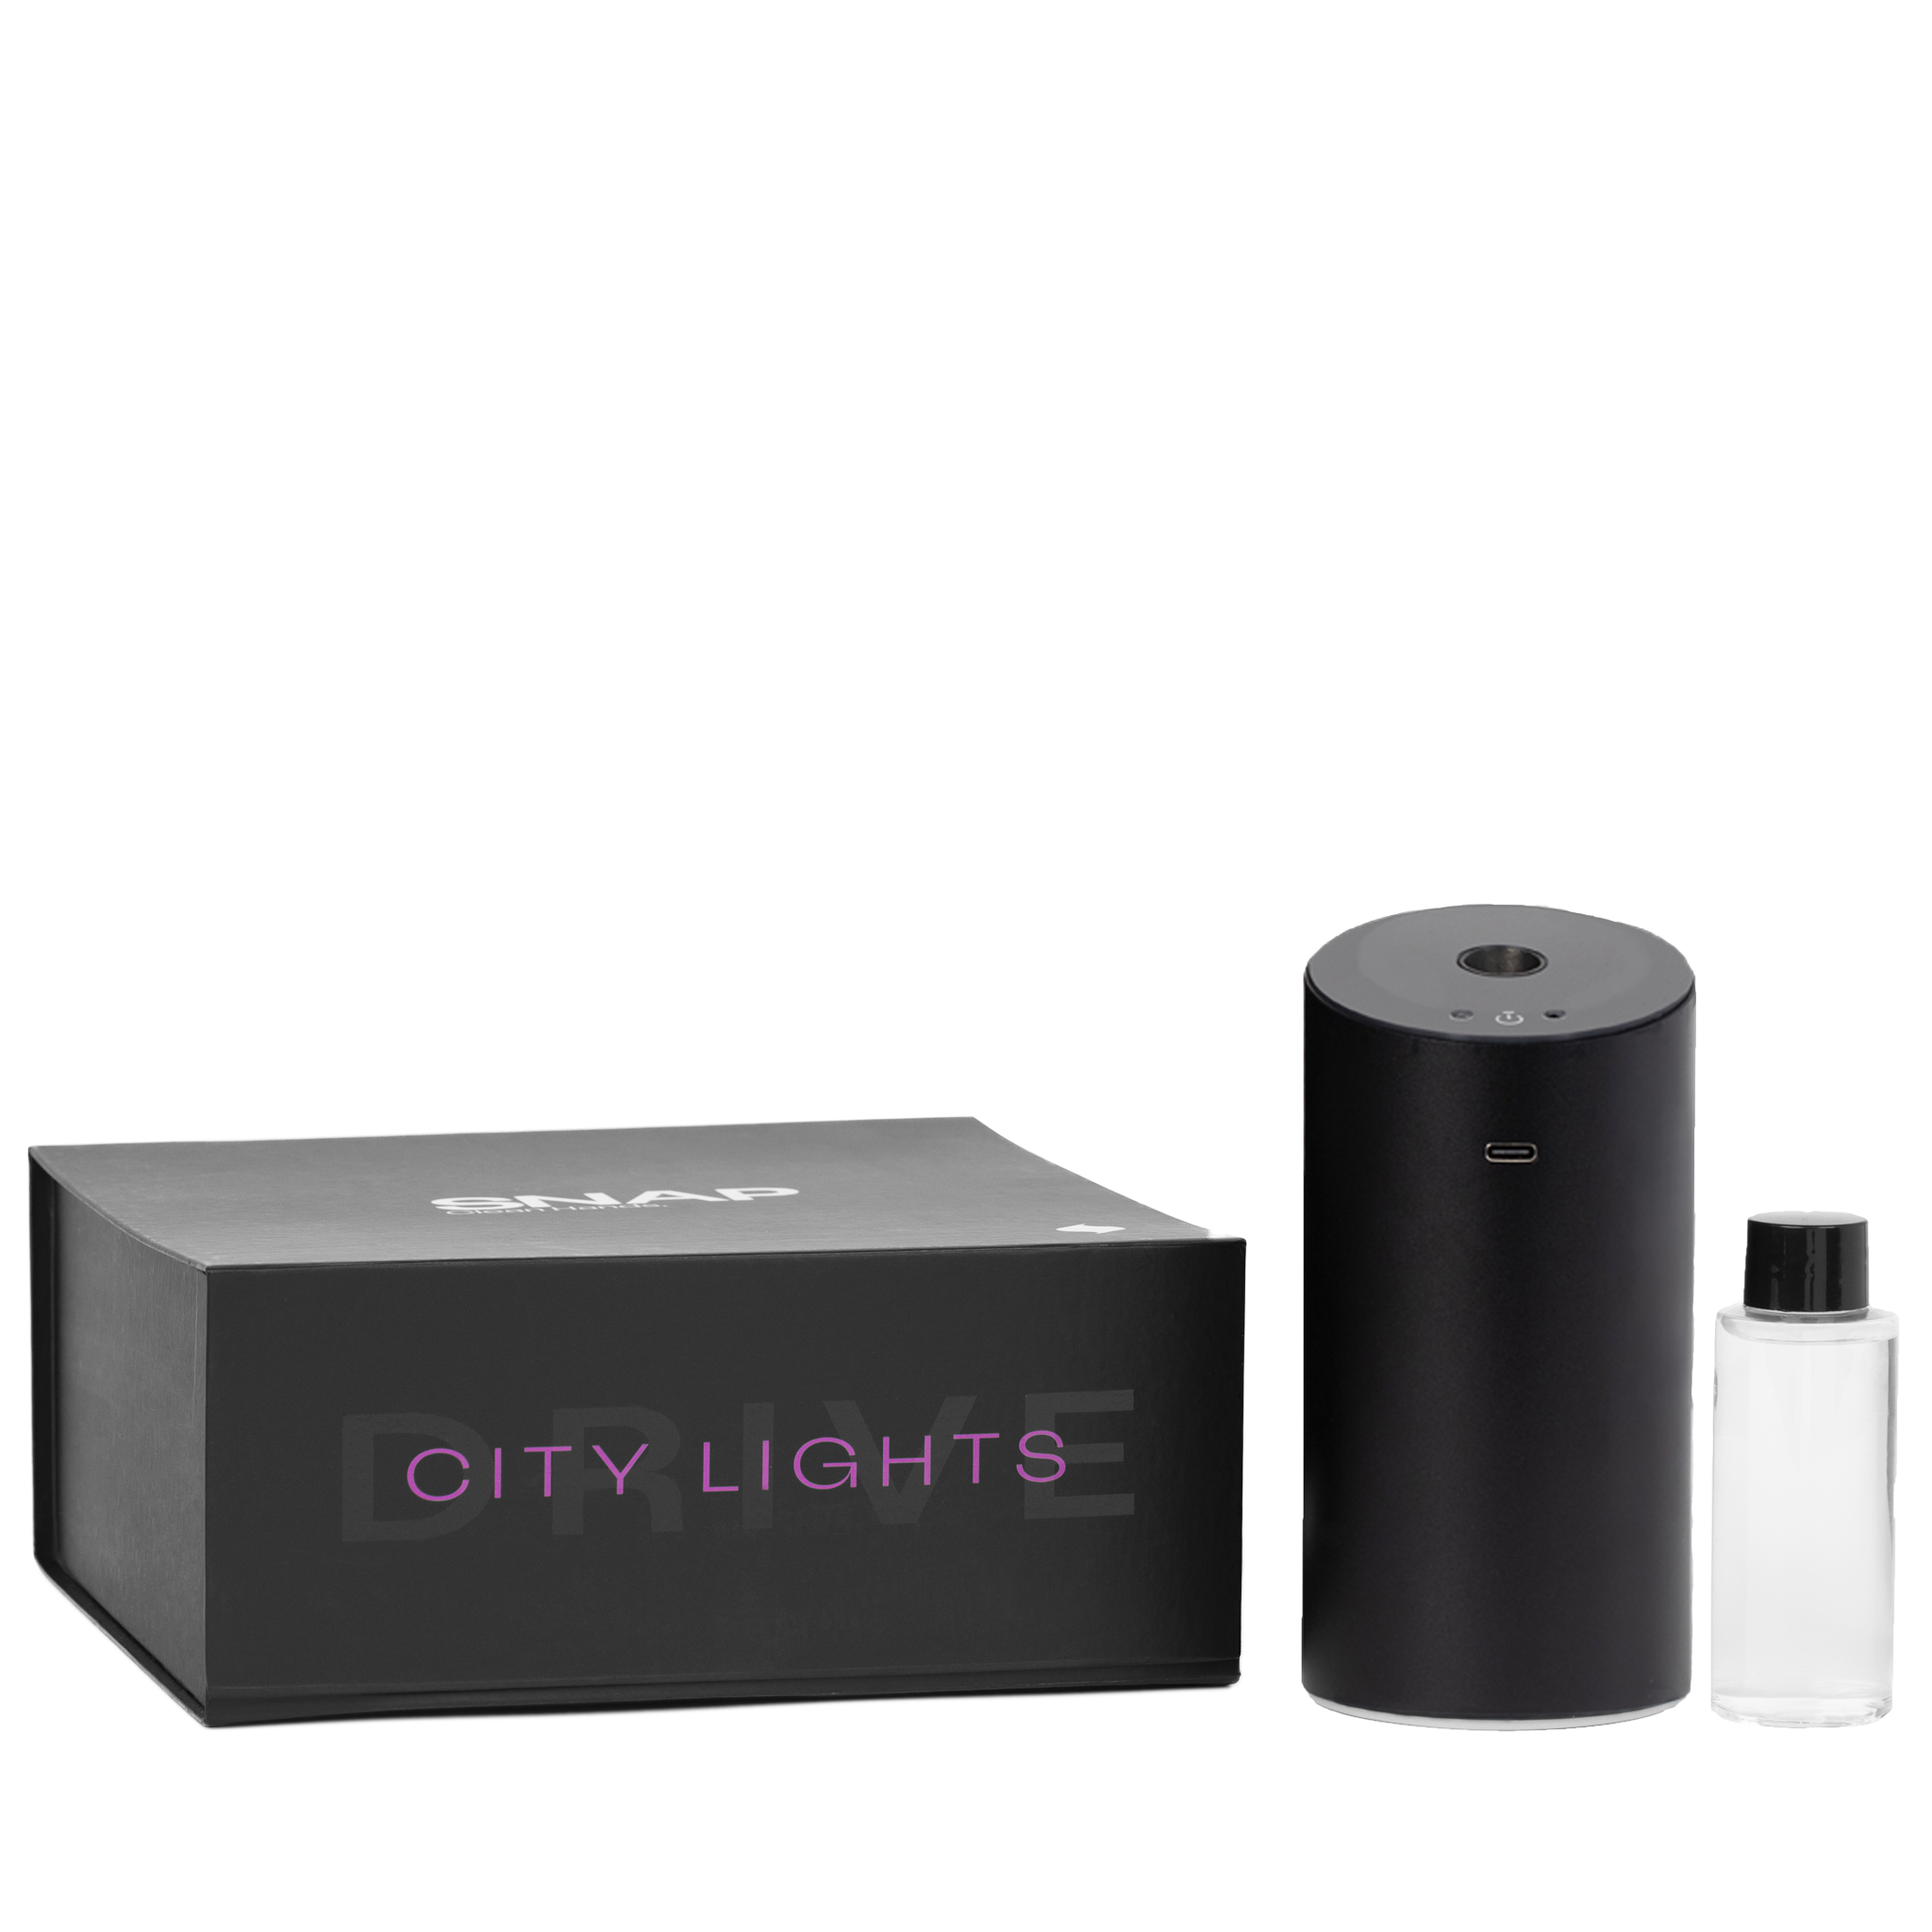 'City Lights' DRIVE Touchless Mist Sanitizer